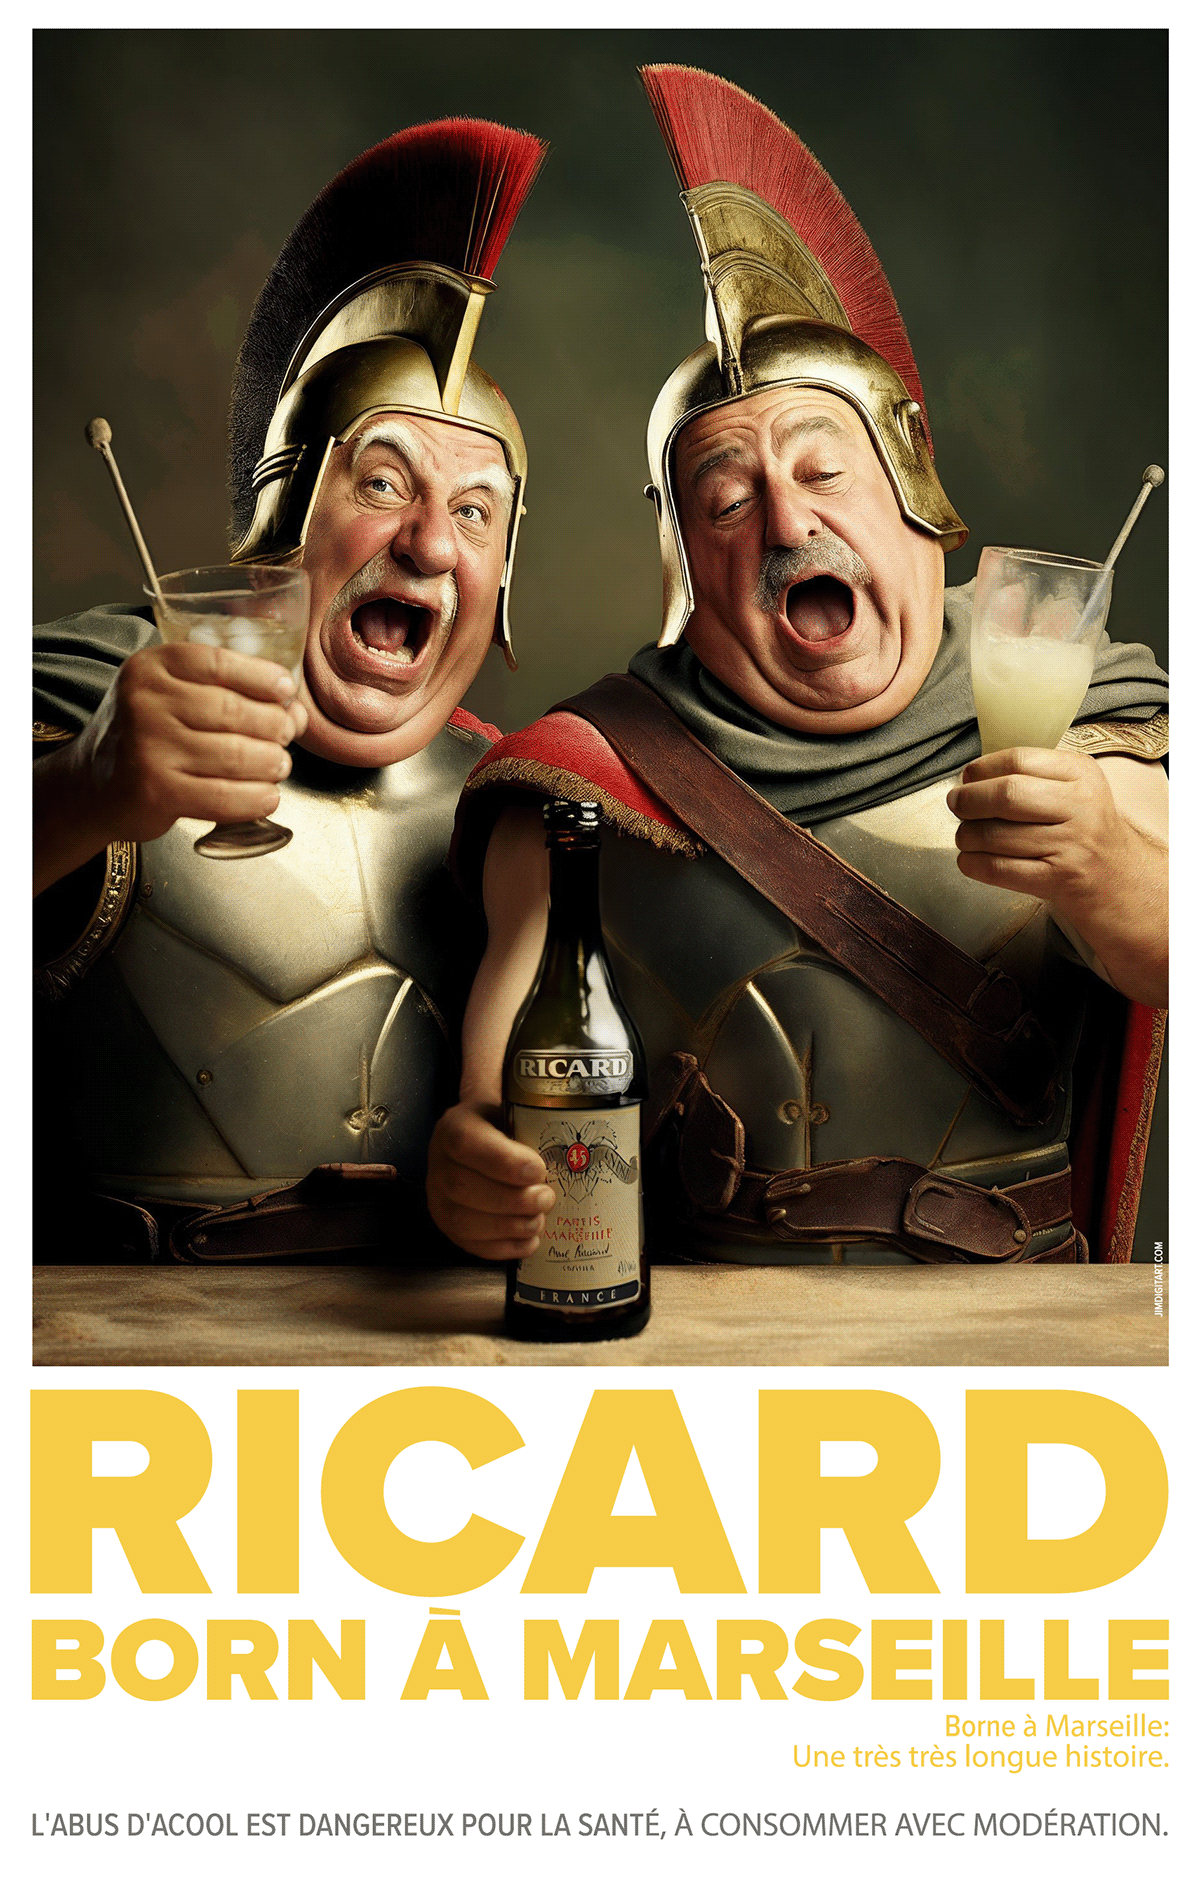 Ricard pernod alcohol pastis marseille Advertising  Graphic Designer visual identity brand marketing  